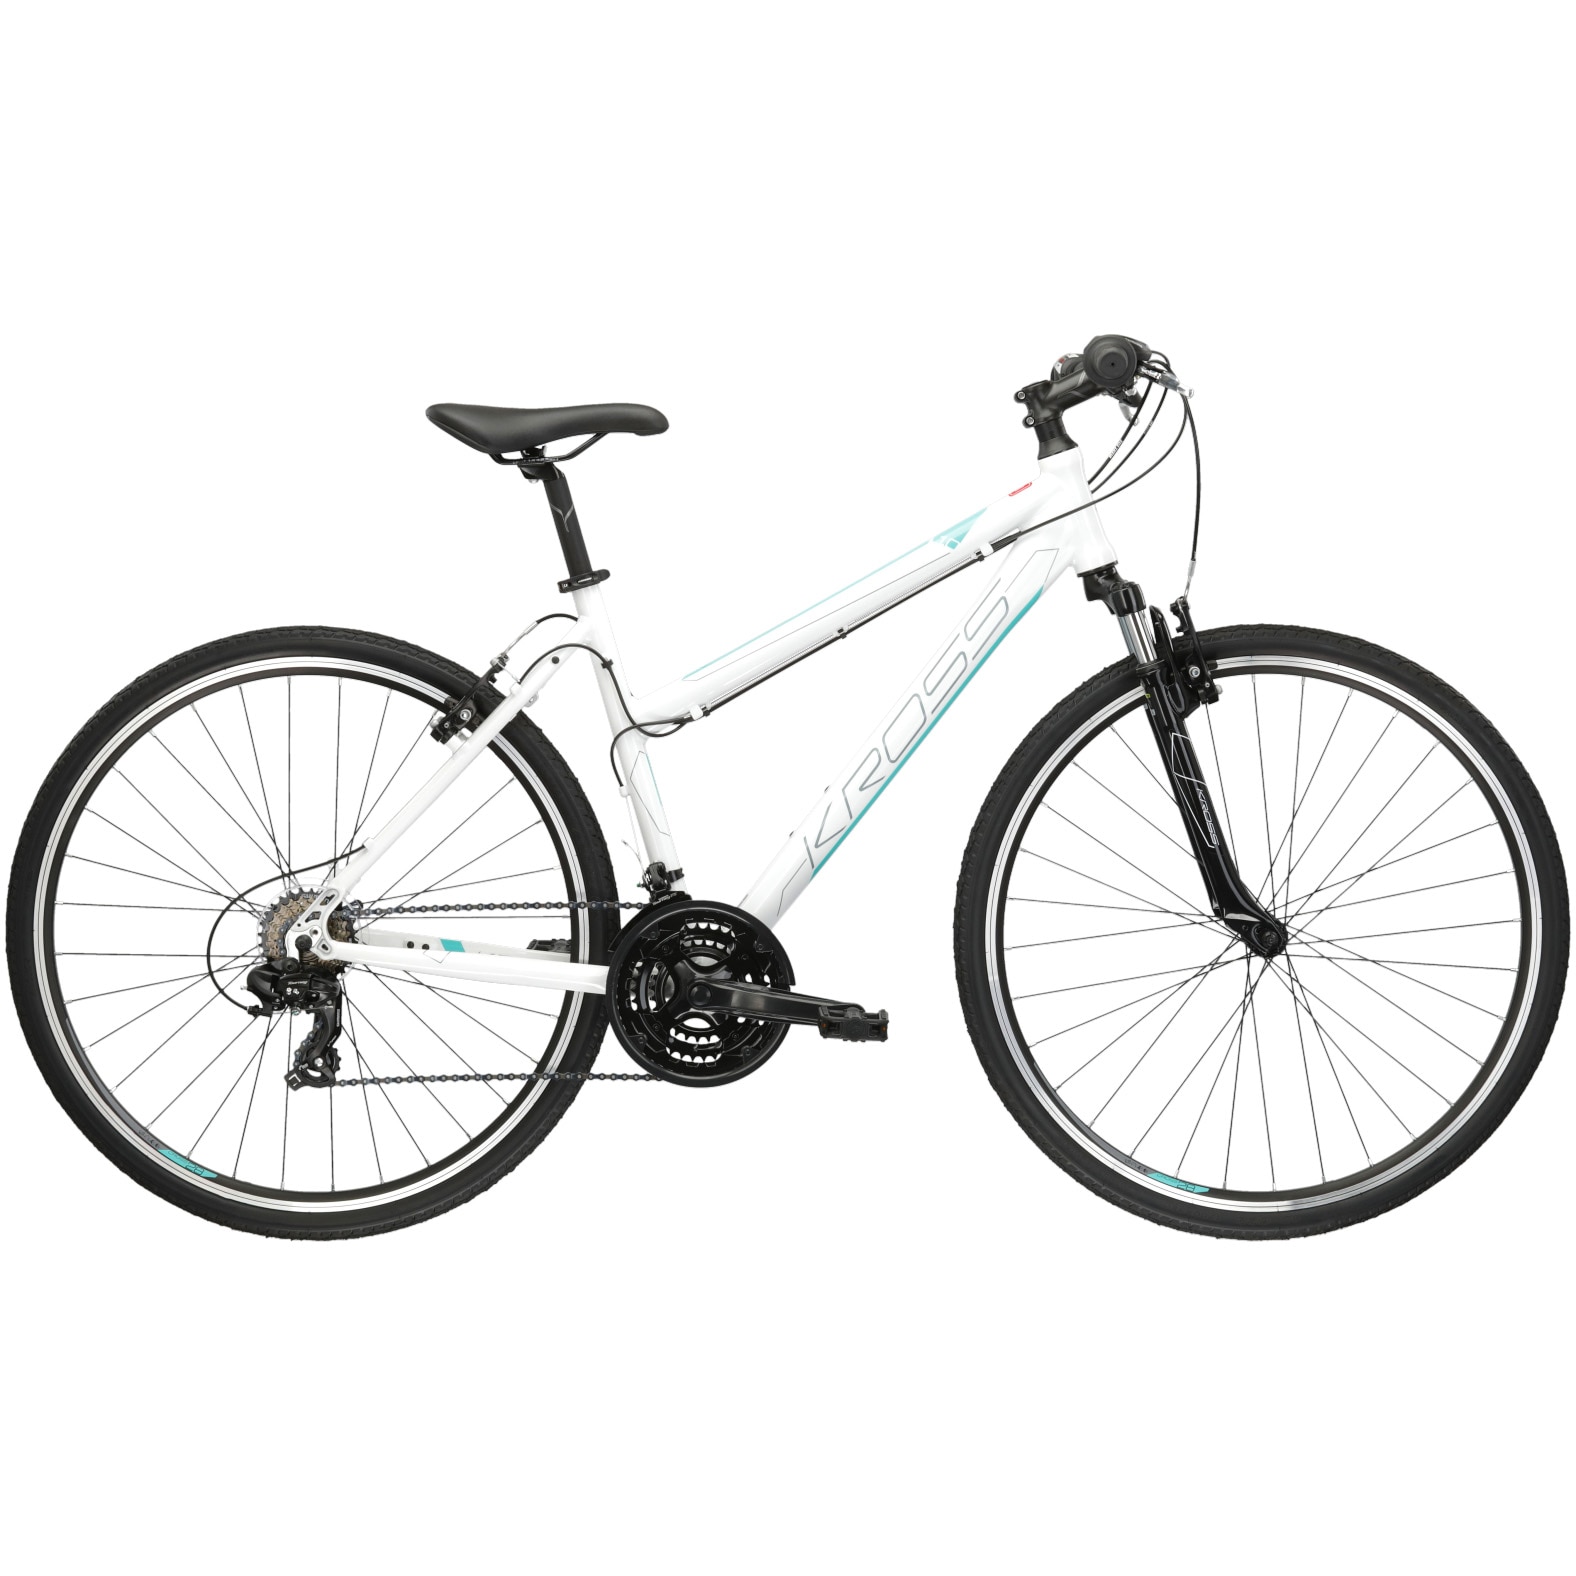 Fotografie Bicicleta KROSS Evado 1.0 D, 28 inch, marime L, white turquoise